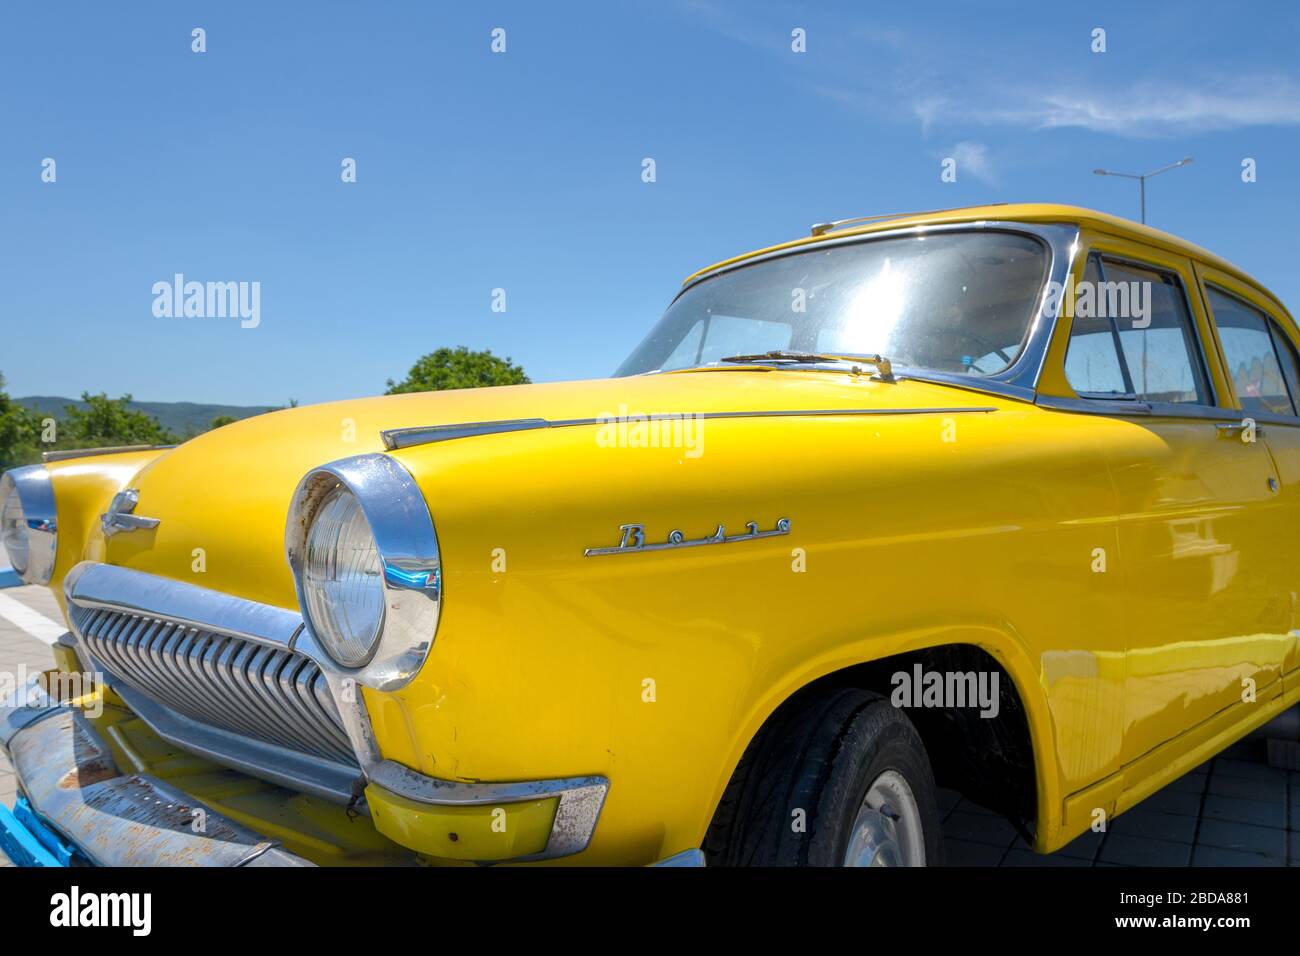 Close up of a yellow classic Russian Gaz Volga car (Gorky Automobile factory) Bulgaria Stock Photo